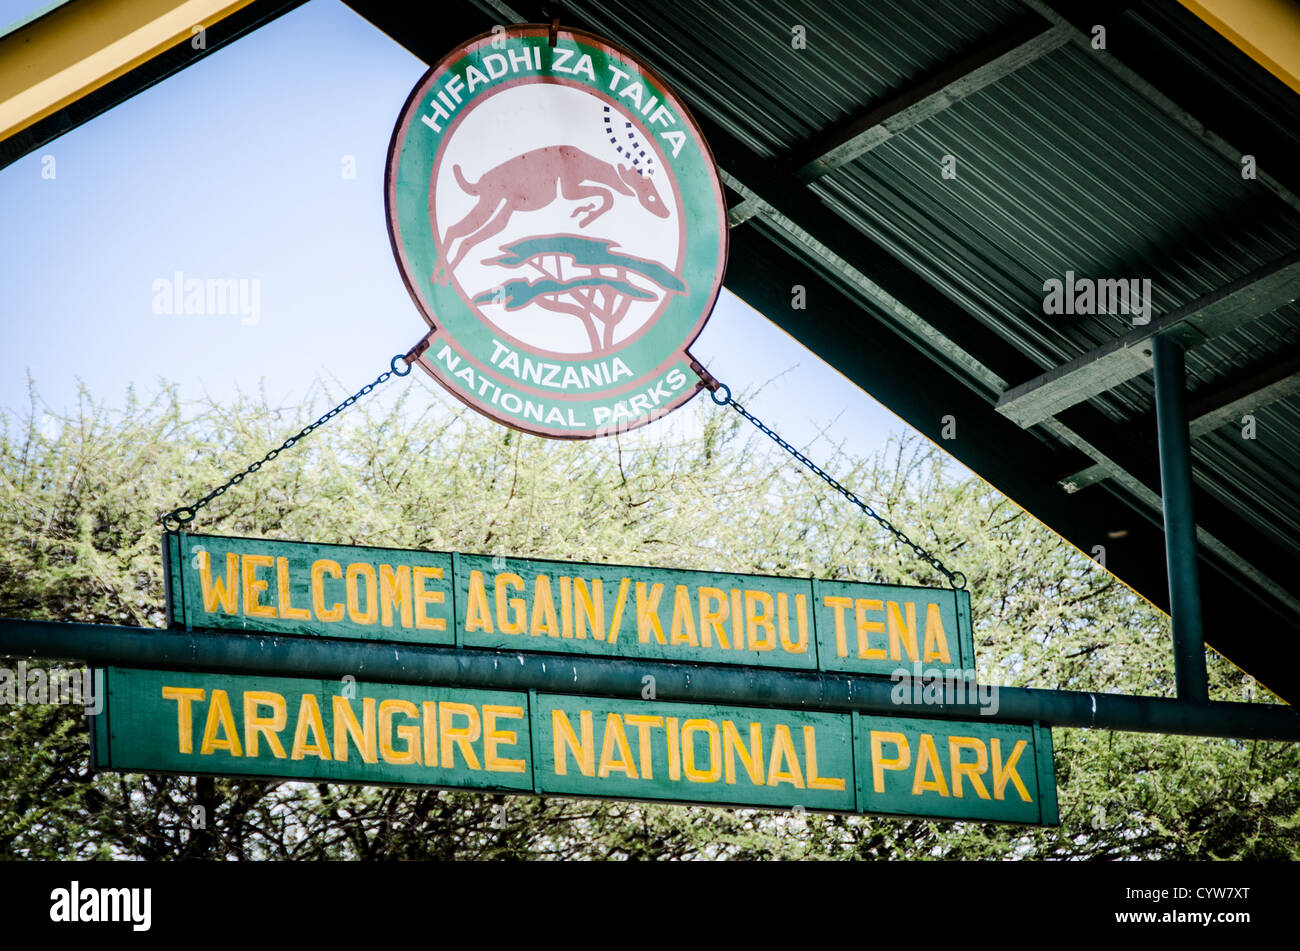 TARANGIRE NATIONAL PARK, Tanzania - Sign overhead at the main entrance to Tarangire National Park in northern Tanzania. Stock Photo